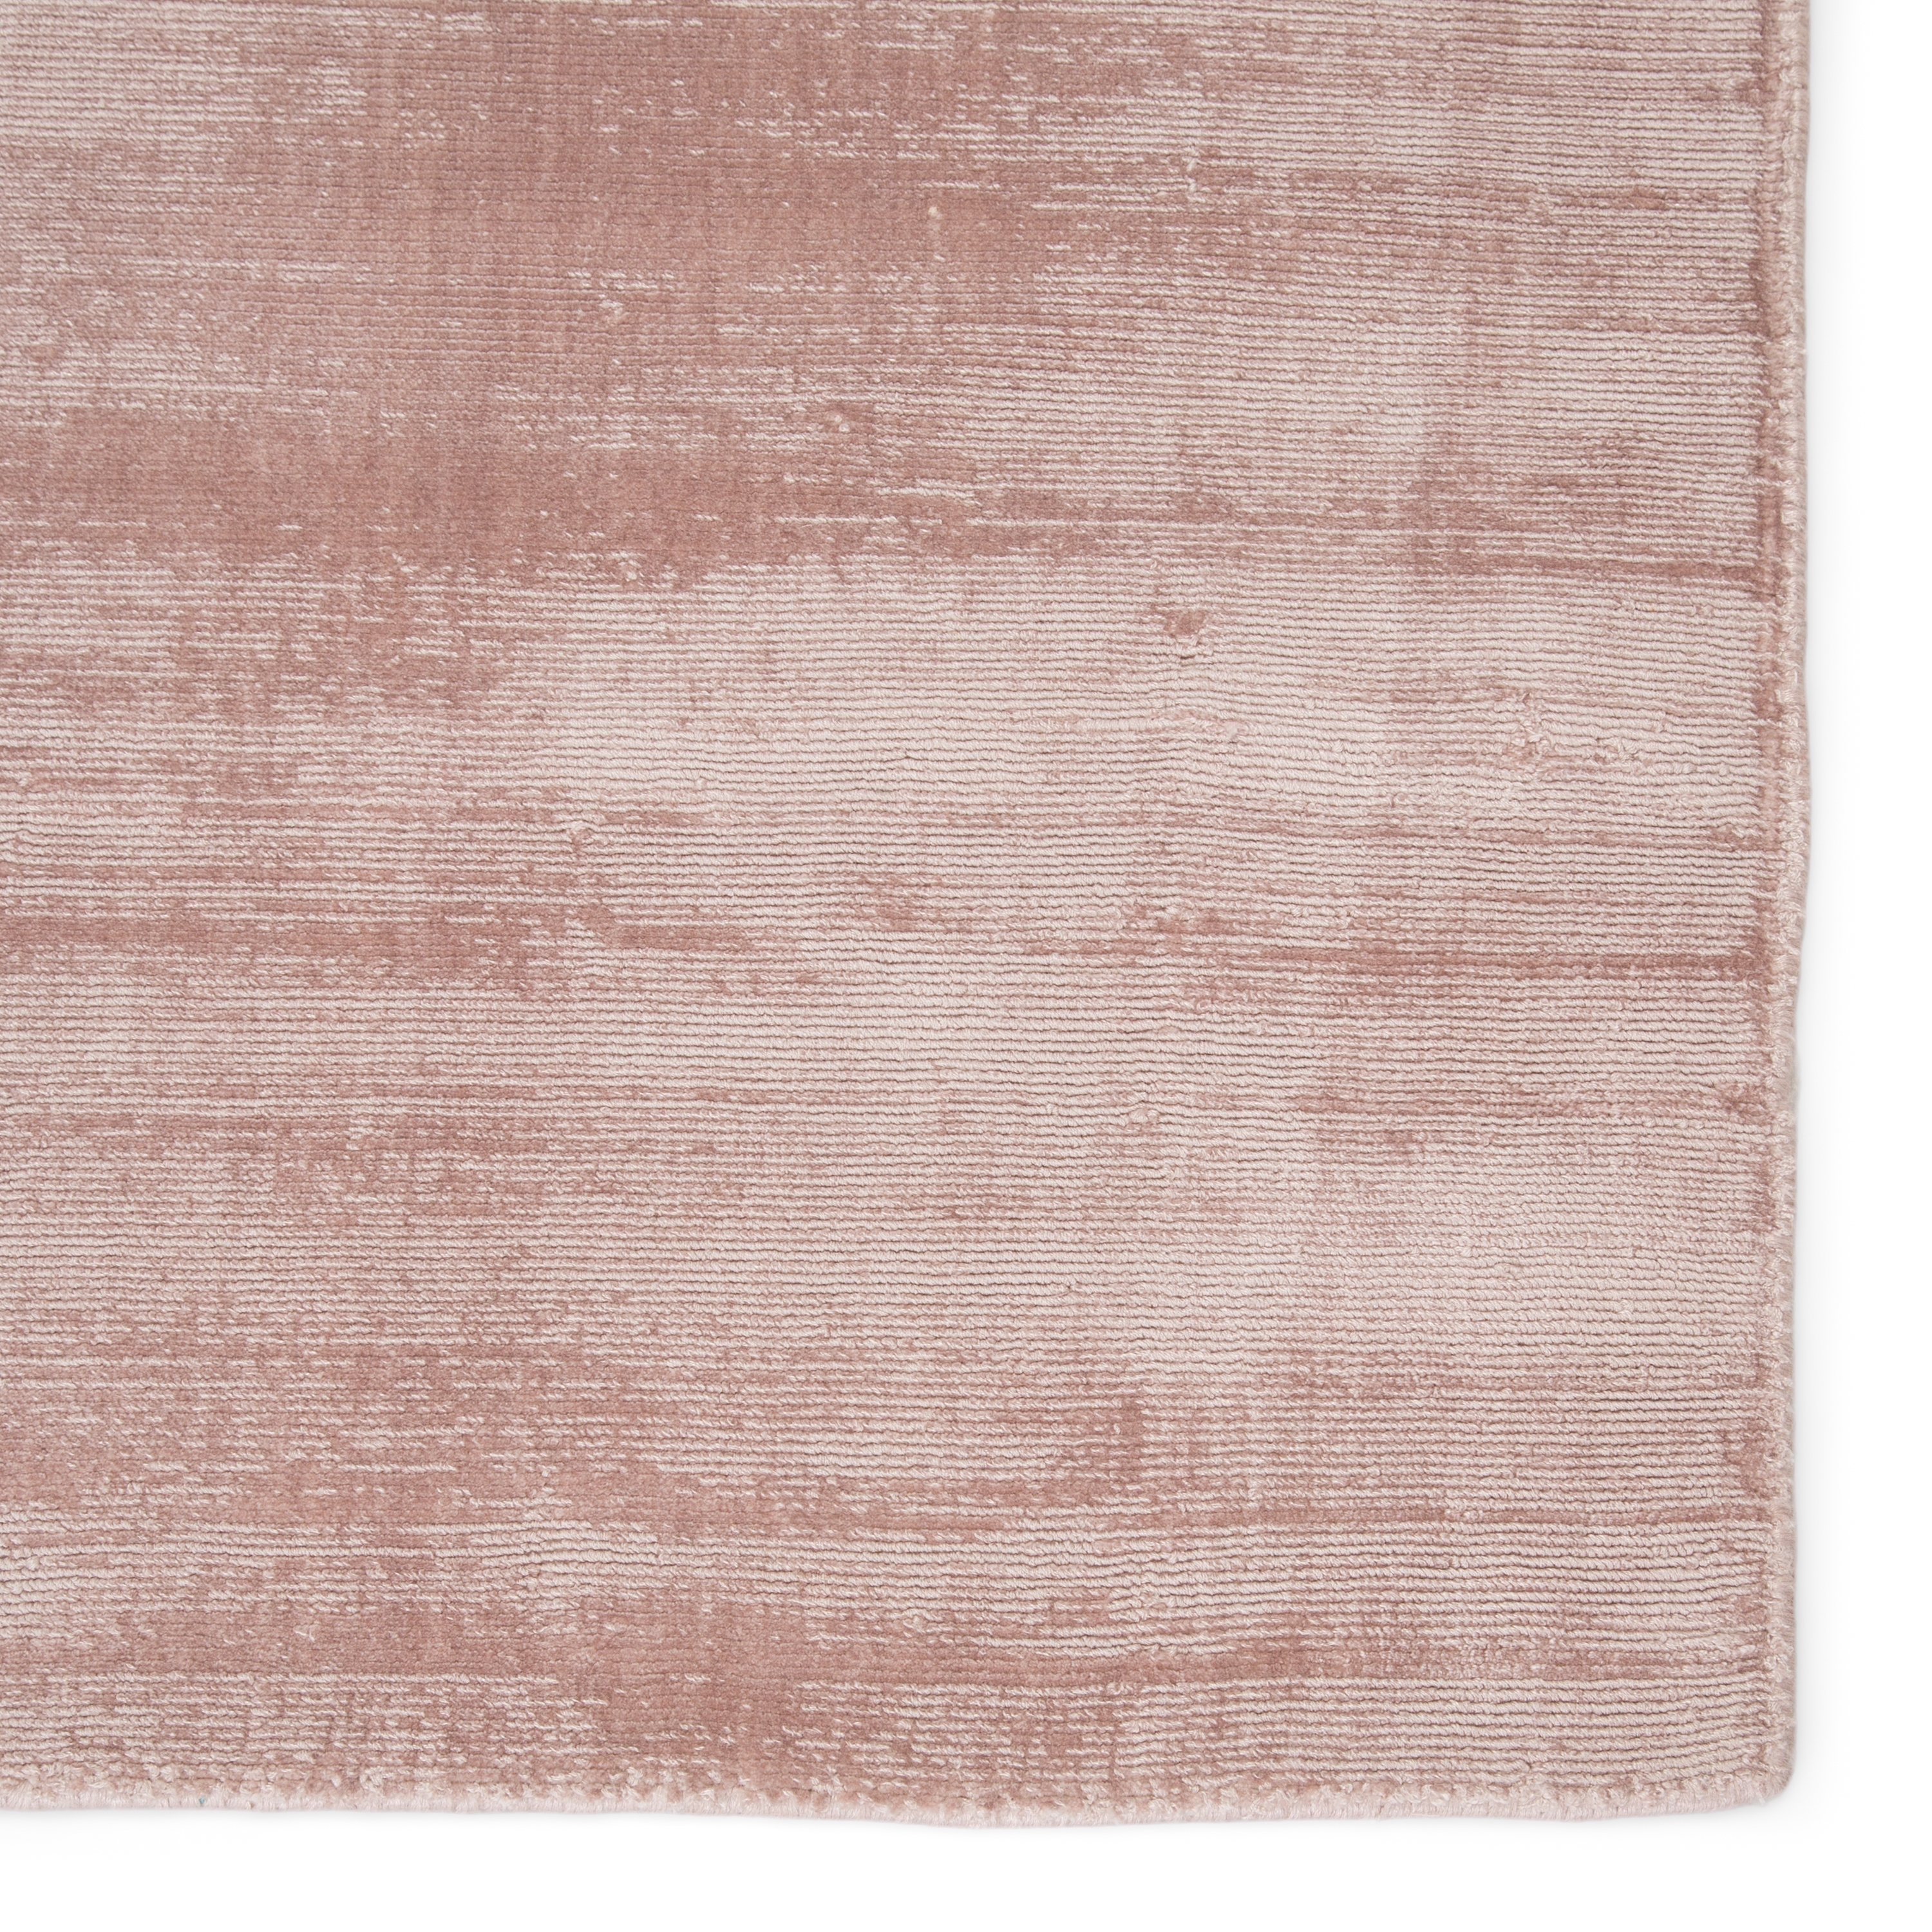 Yasmin Handmade Solid Pink Area Rug (5' X 8') - Image 3